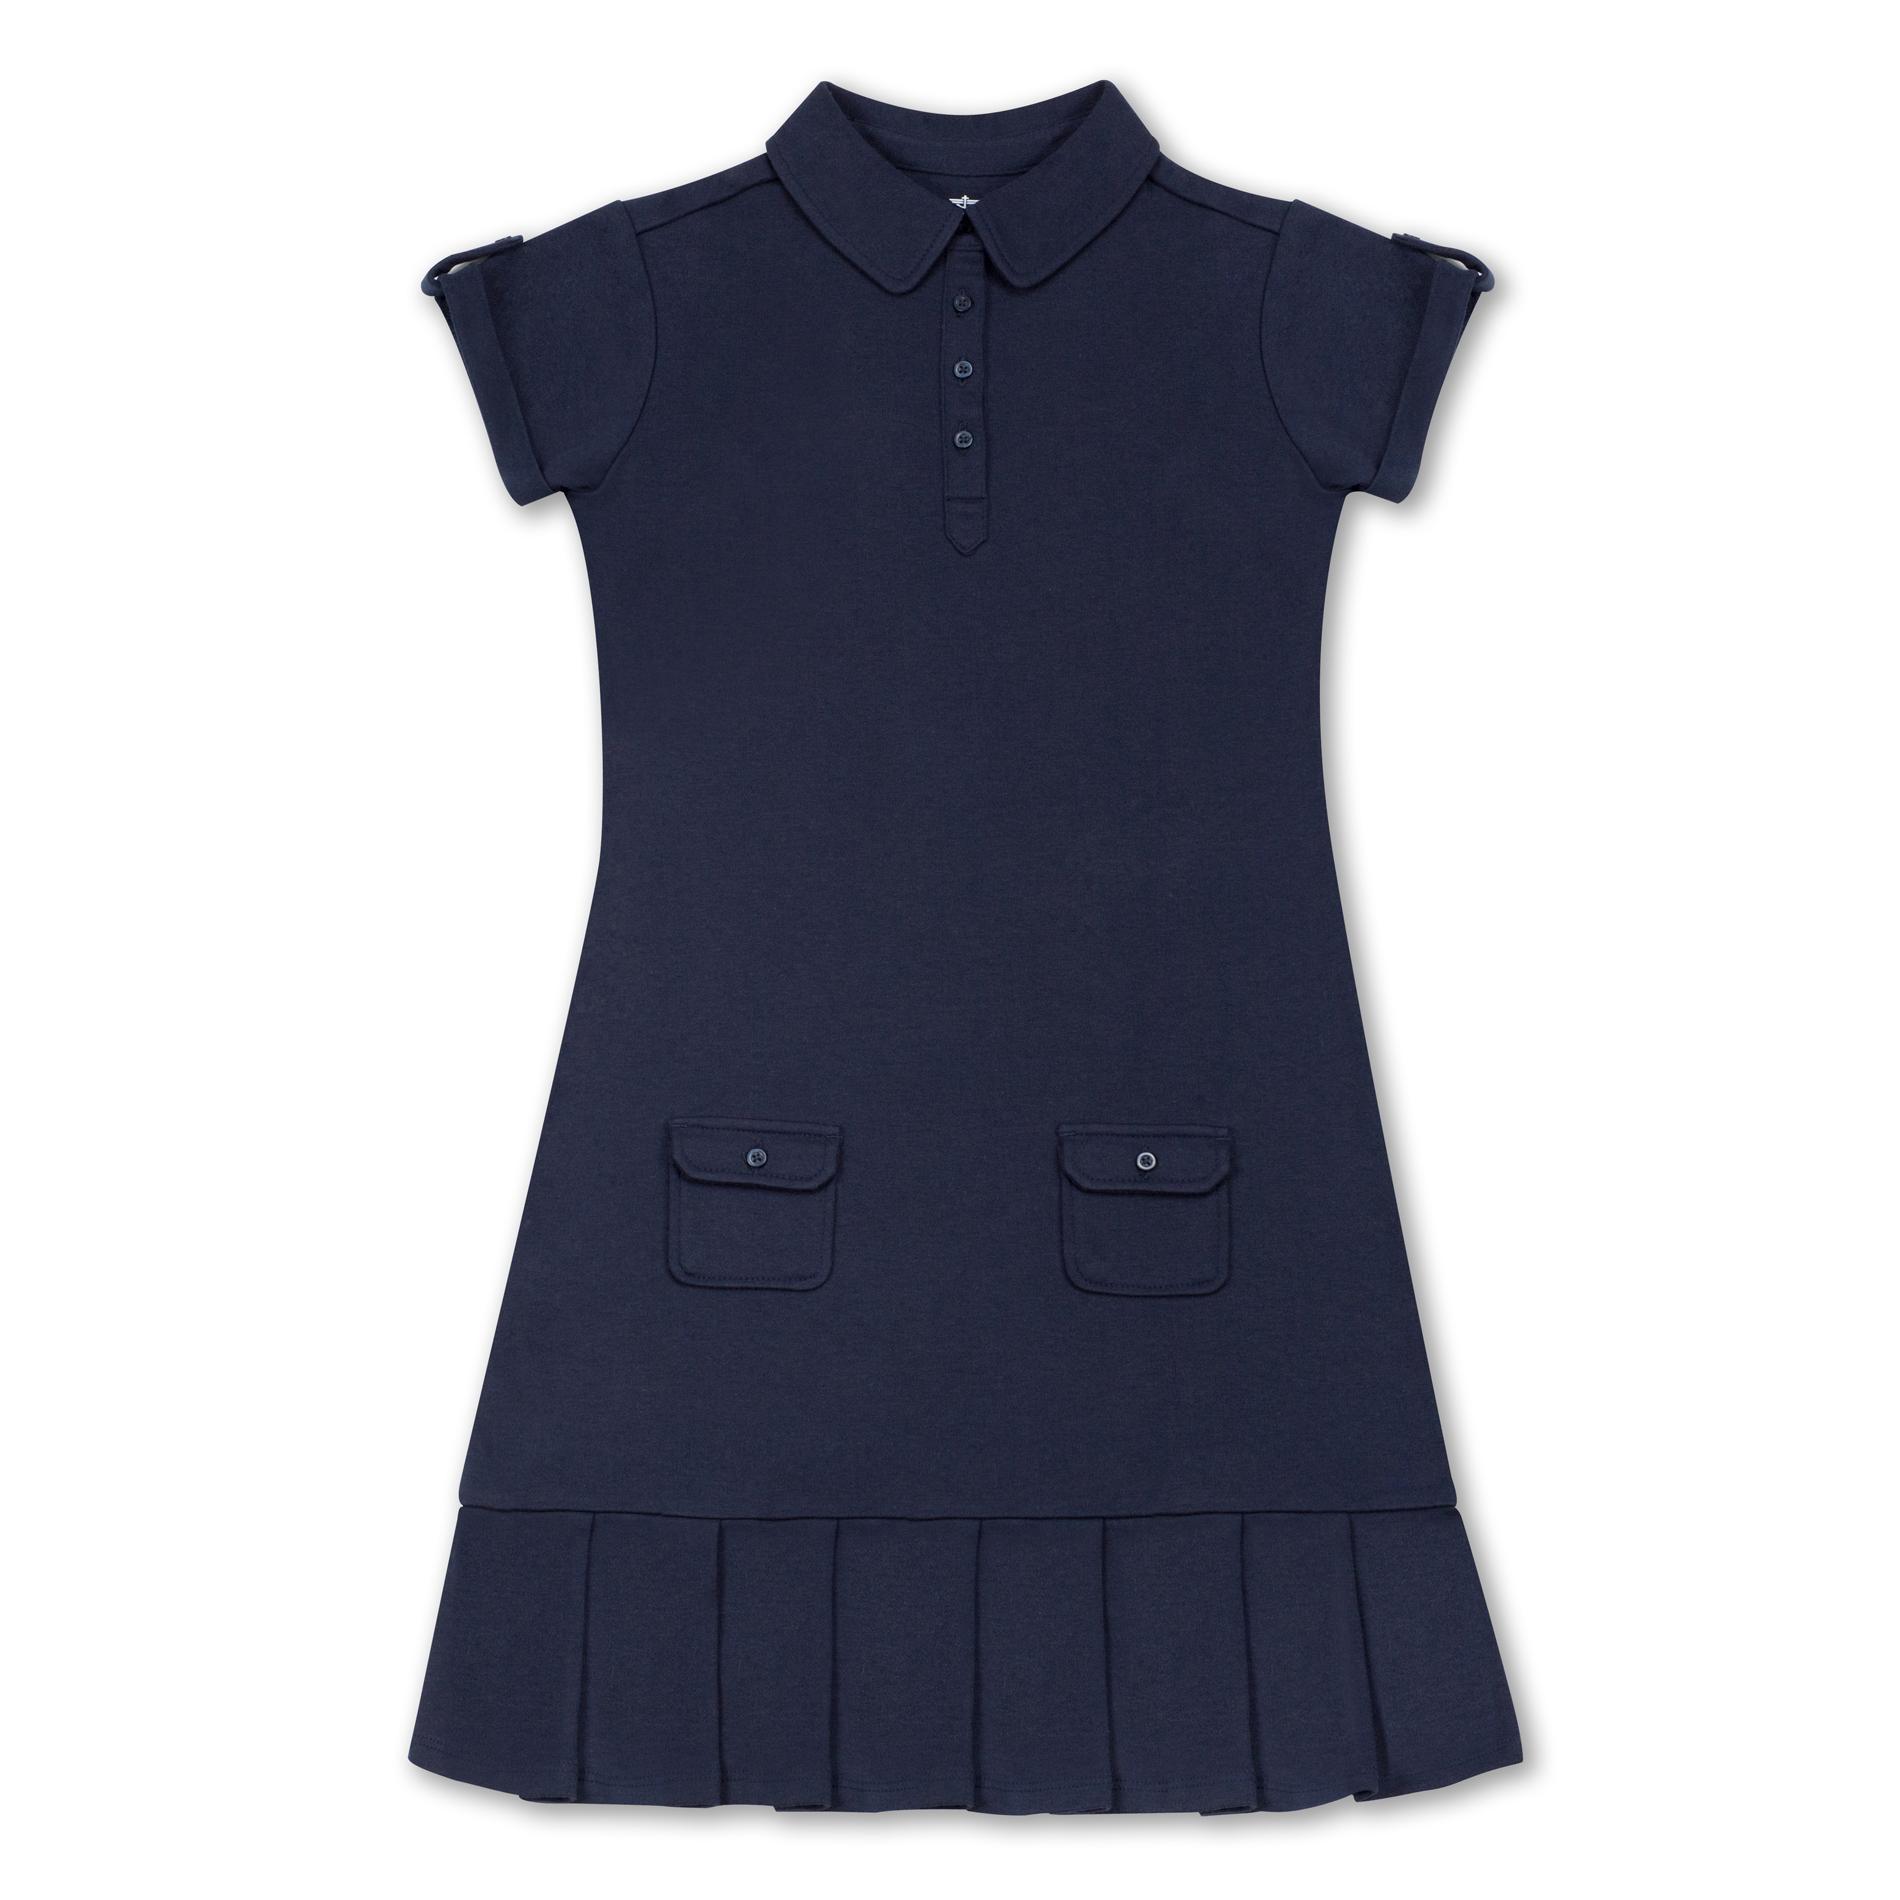 Dockers Girl's Uniform Polo Shirt Dress - Pockets